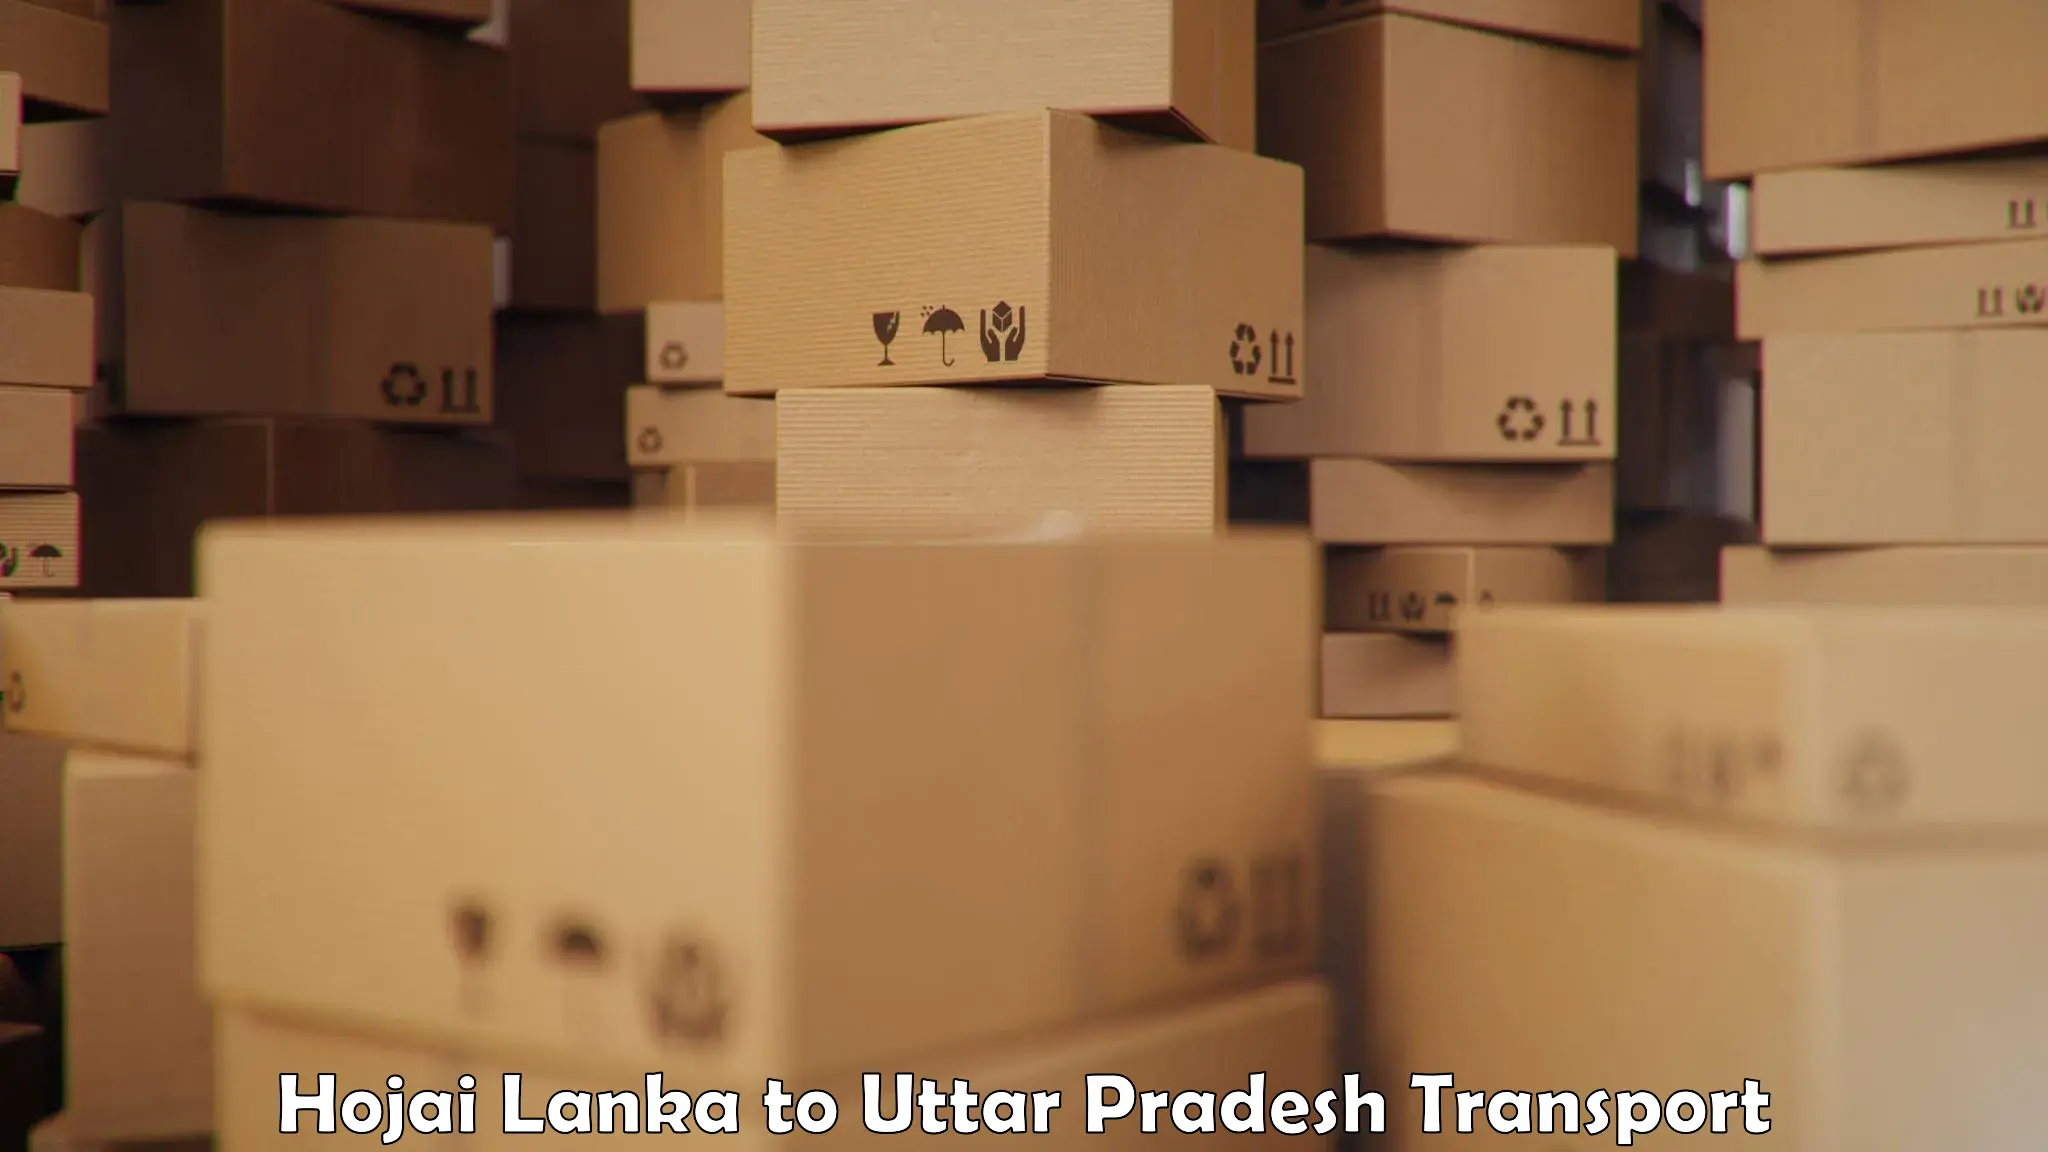 Cargo train transport services Hojai Lanka to Uttar Pradesh